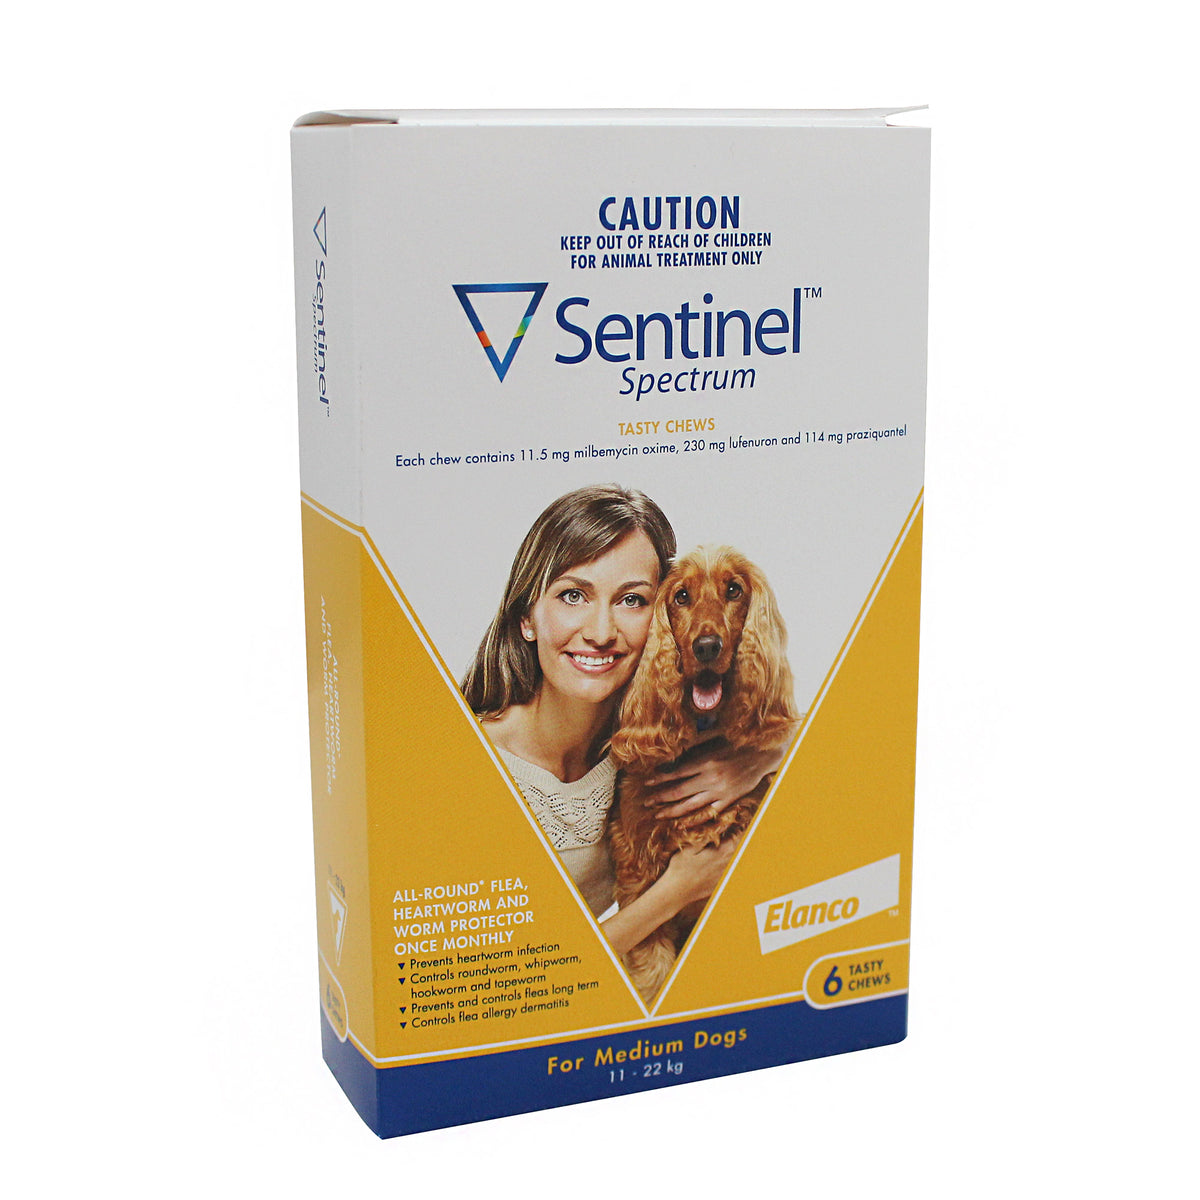 Sentinel Spectrum Chews Yellow for Medium Dogs 12-22kg.